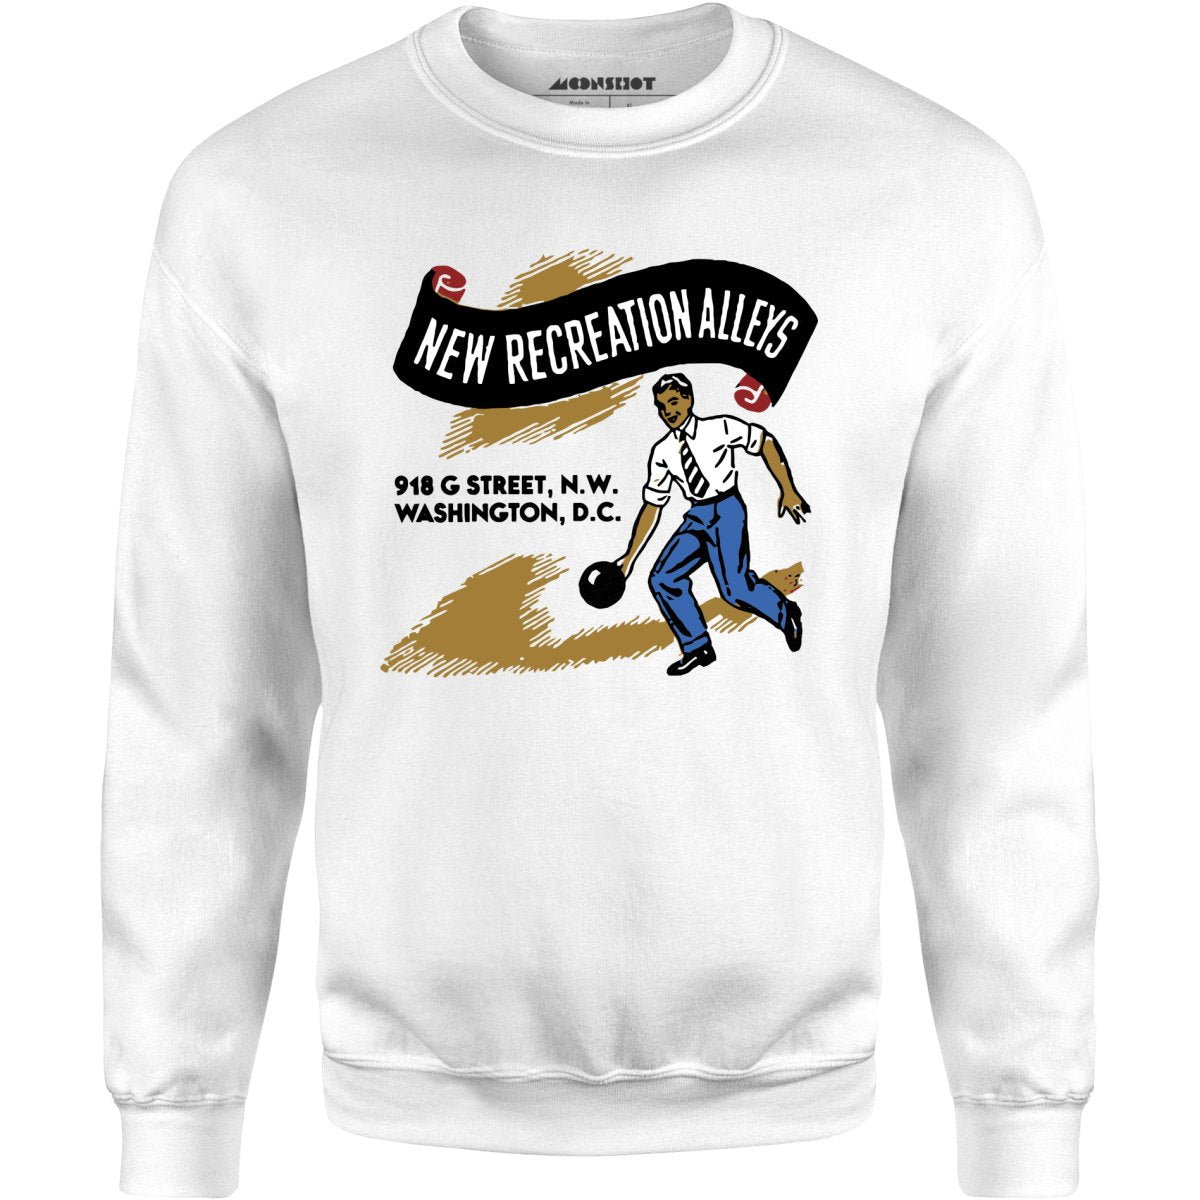 New Recreation Alleys - Washington D.C. - Vintage Bowling Alley - Unisex Sweatshirt